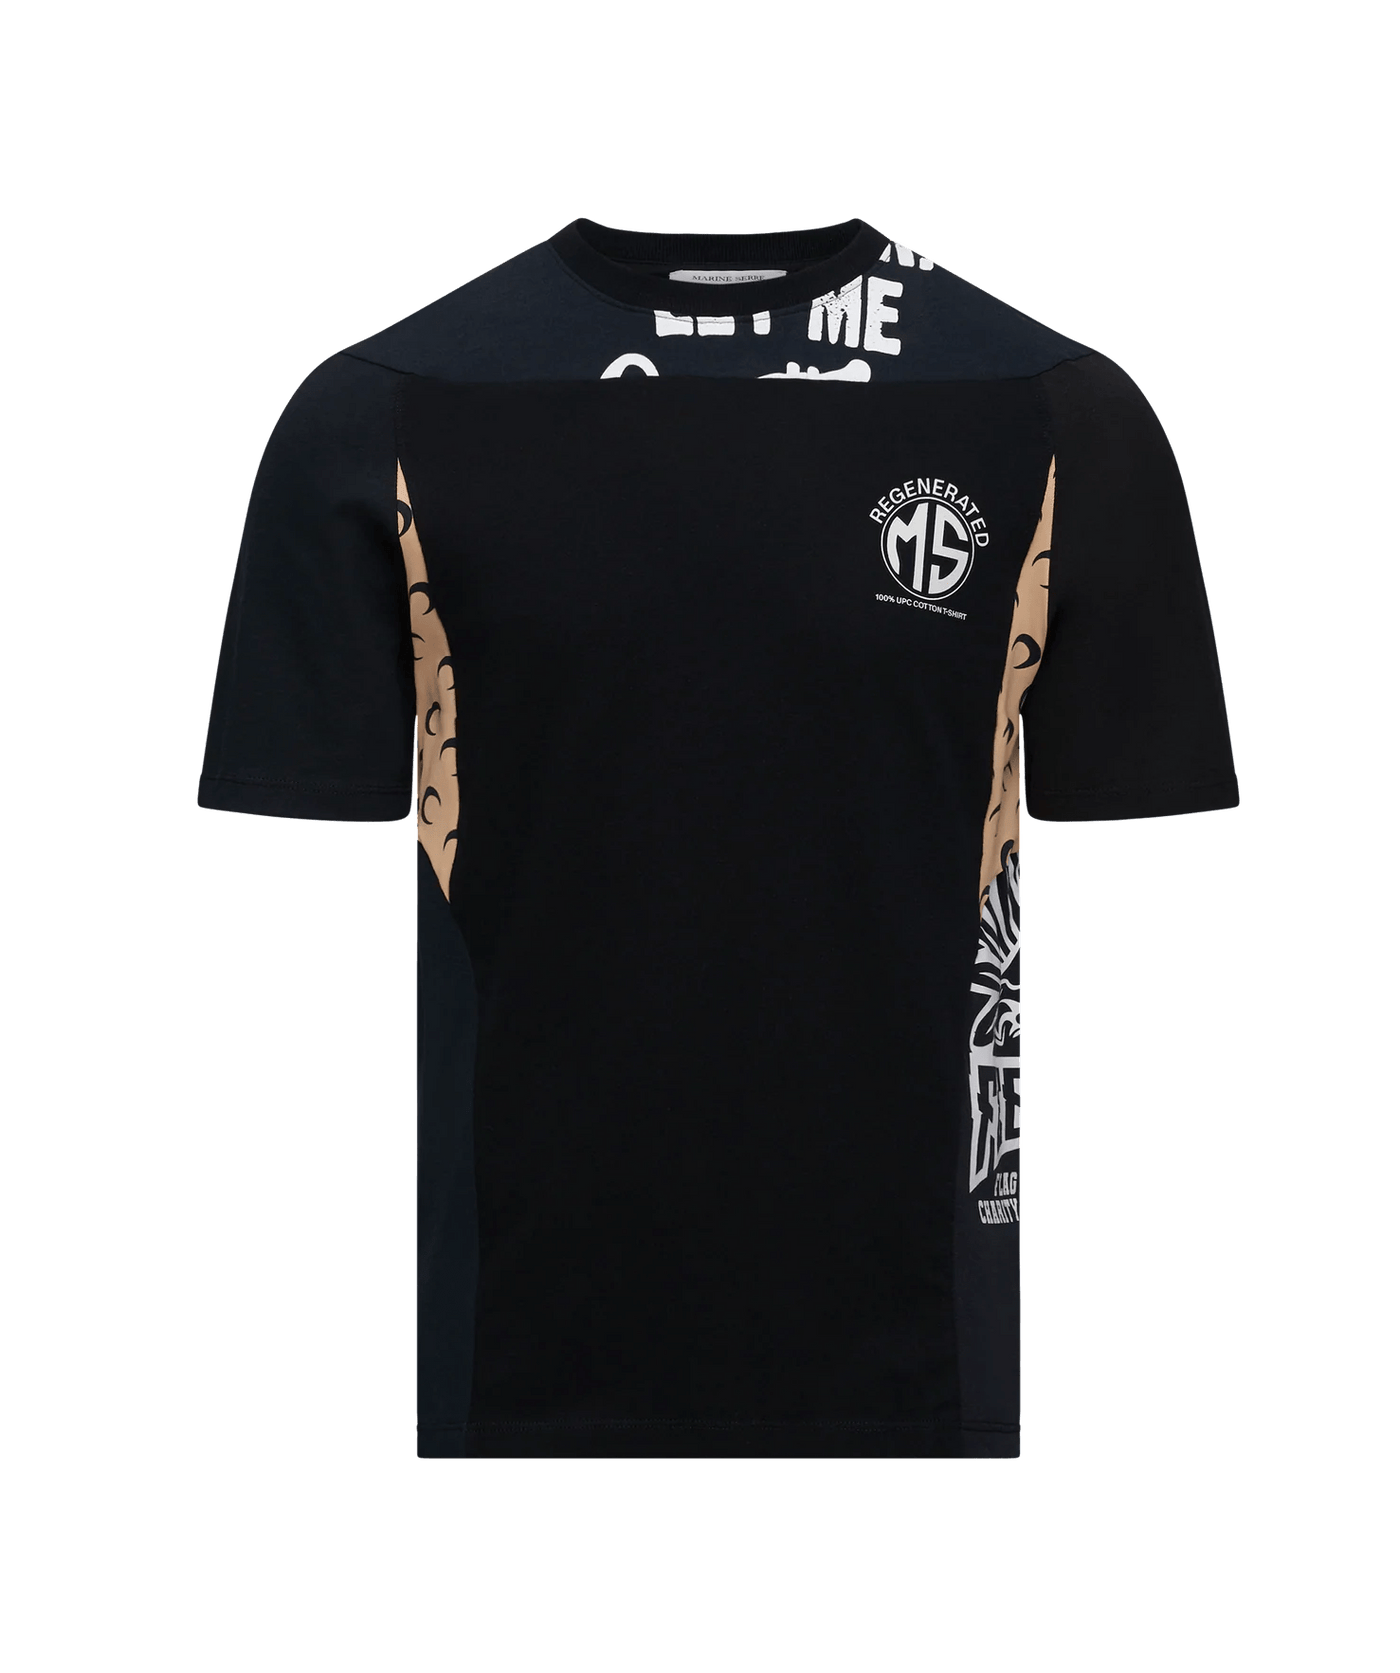 Marine Serre - T Shirt black regenerated graphic - Lothaire